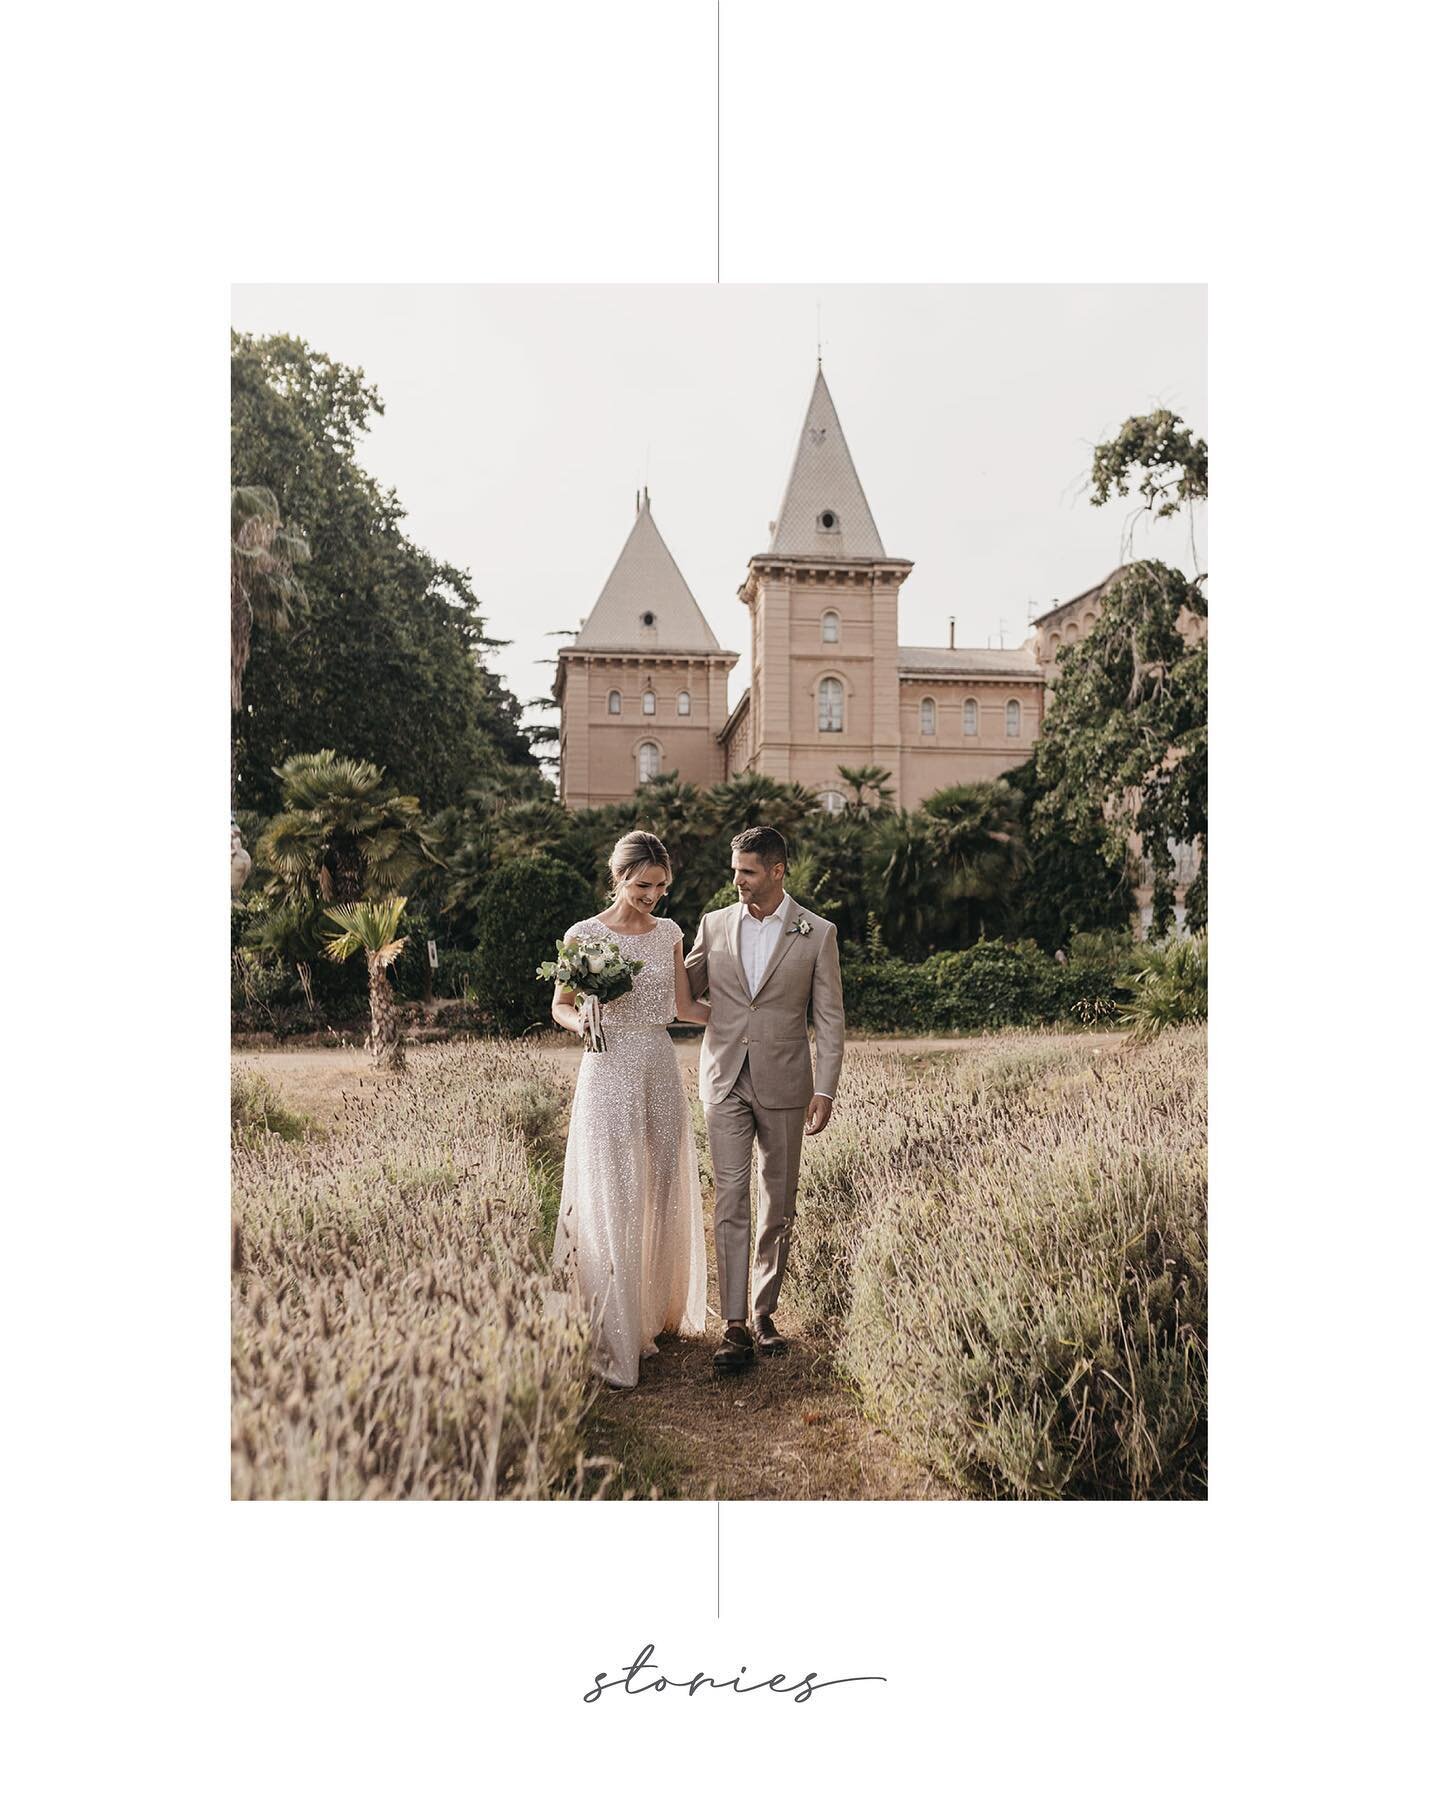 .
_T&amp;O_

@parcsama 
@calblayevents 
@annacampbellbridal 
@thevisualpartners 

#visual_stories #tvp_stories
#weddingphotography #tarragona 
#catalunyawedding #stories